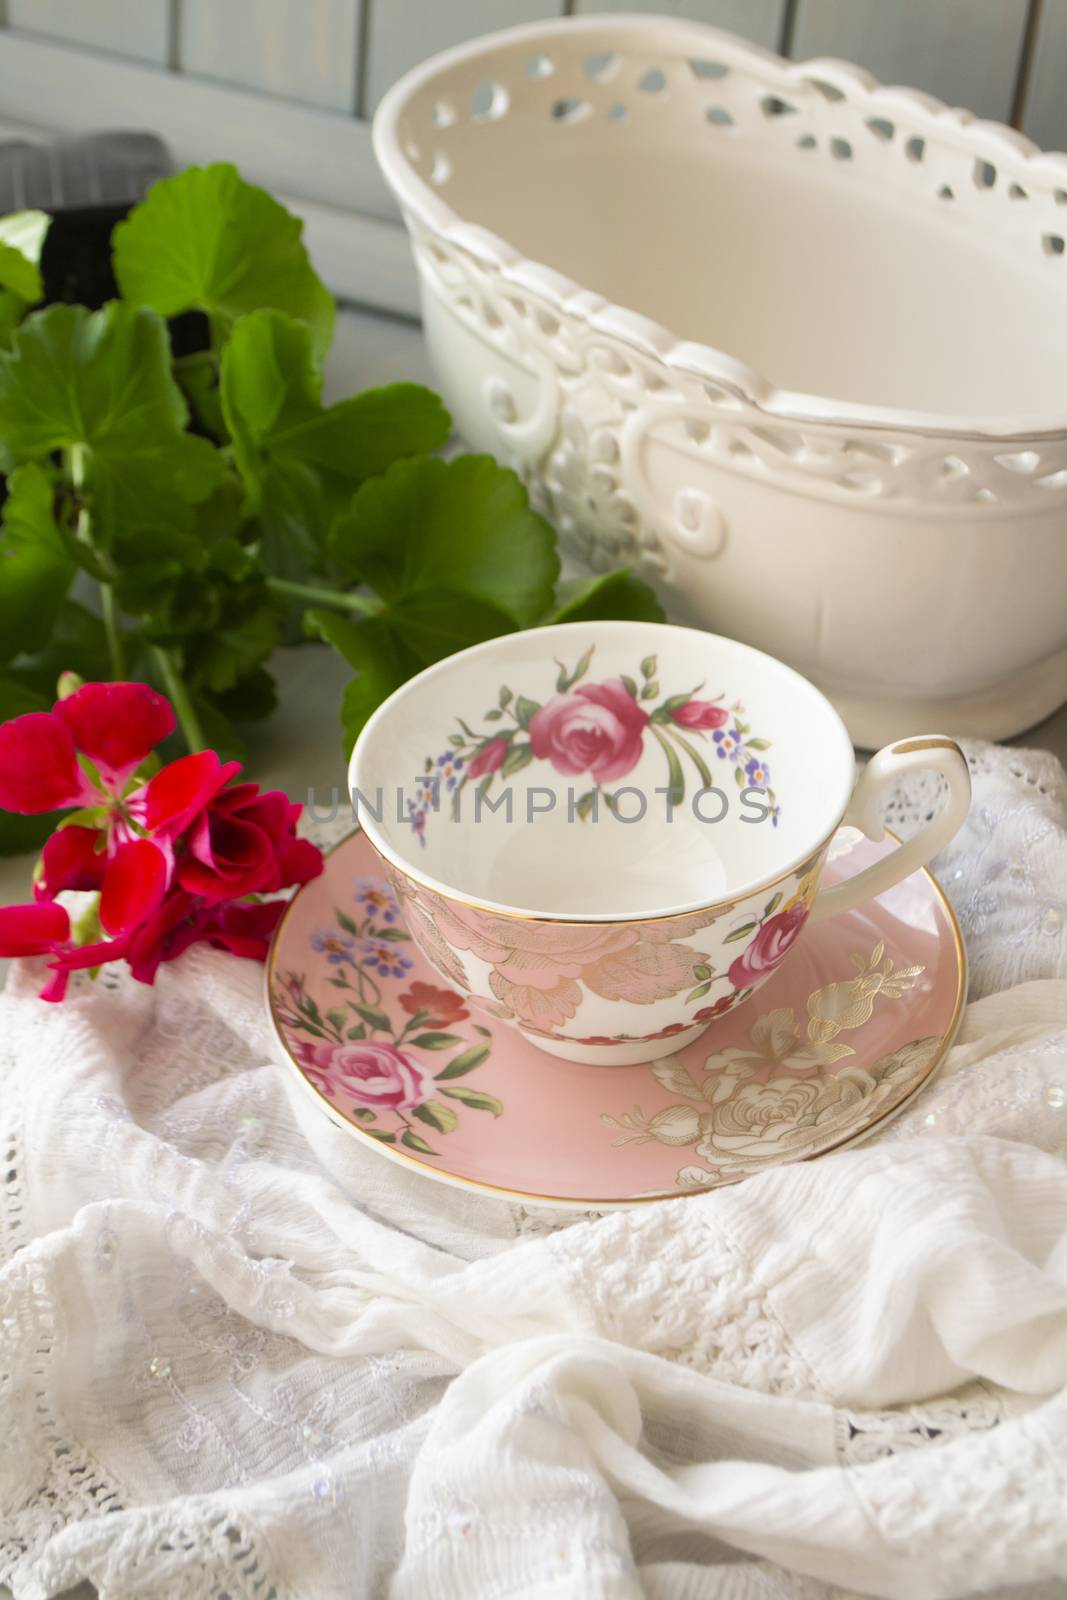 Antique porcelain tea cup on lace table cover, vertical image